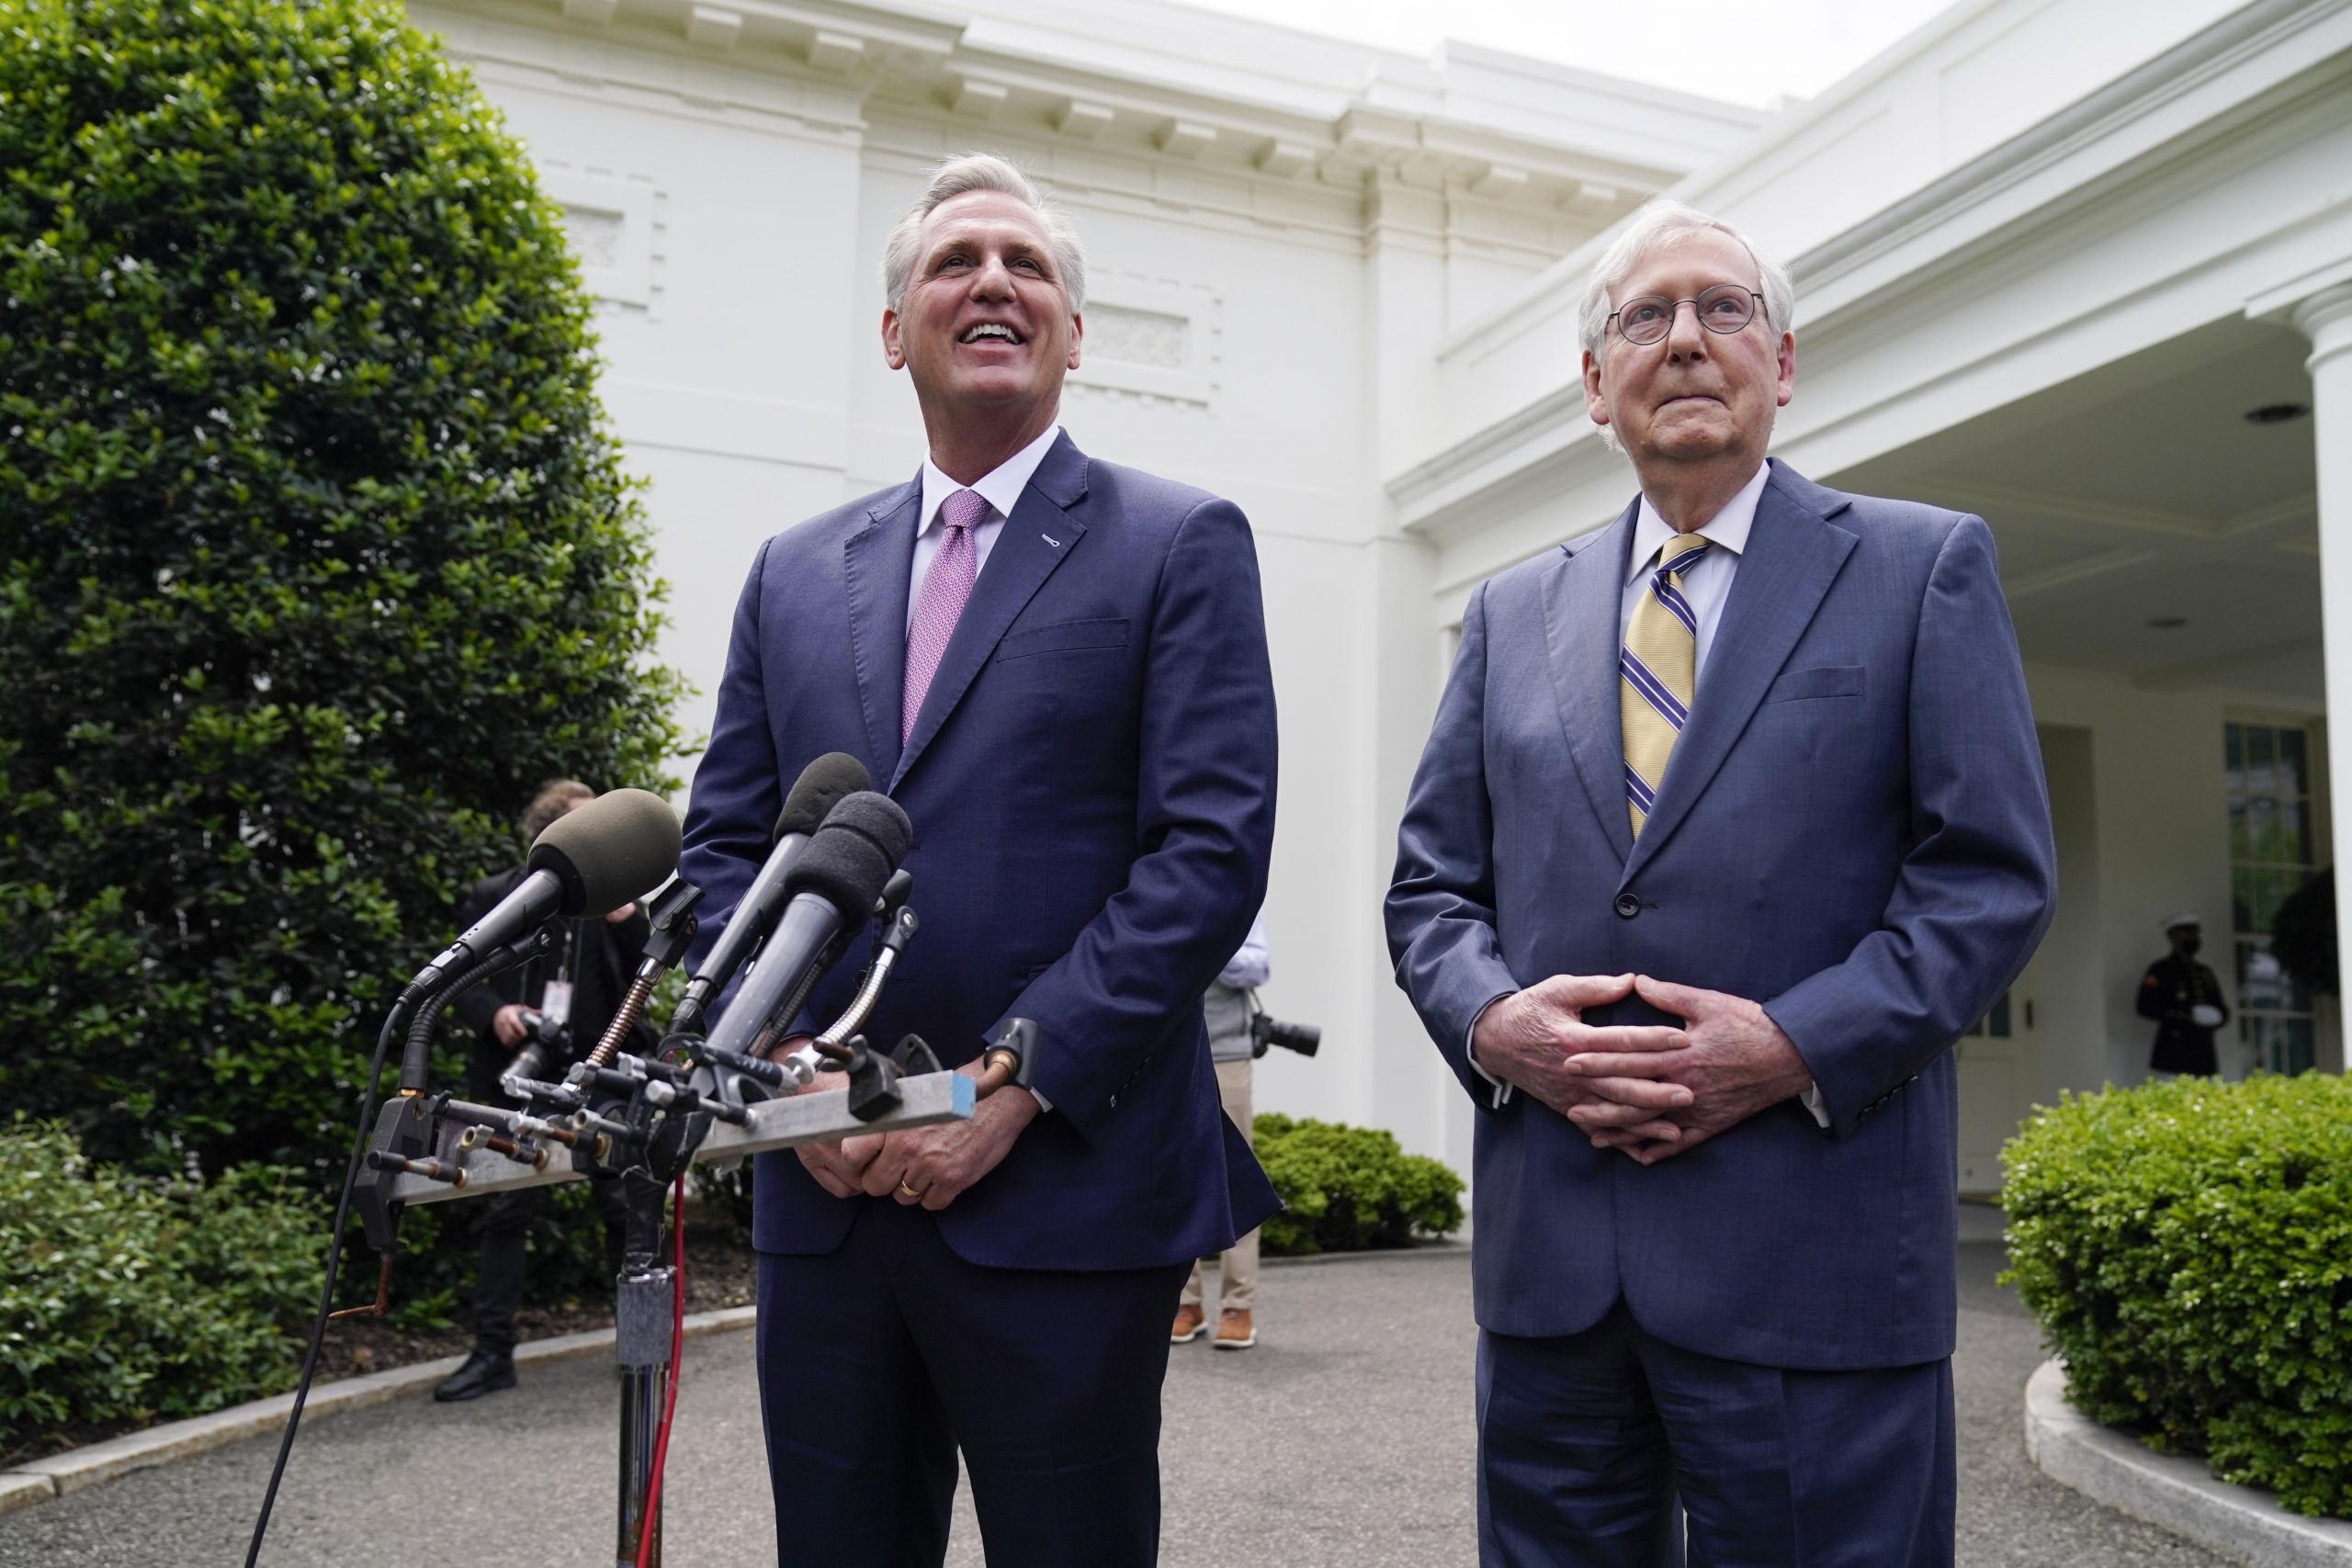 2022 US Midterms: What happens if Republicans regain control of the House, Senate?